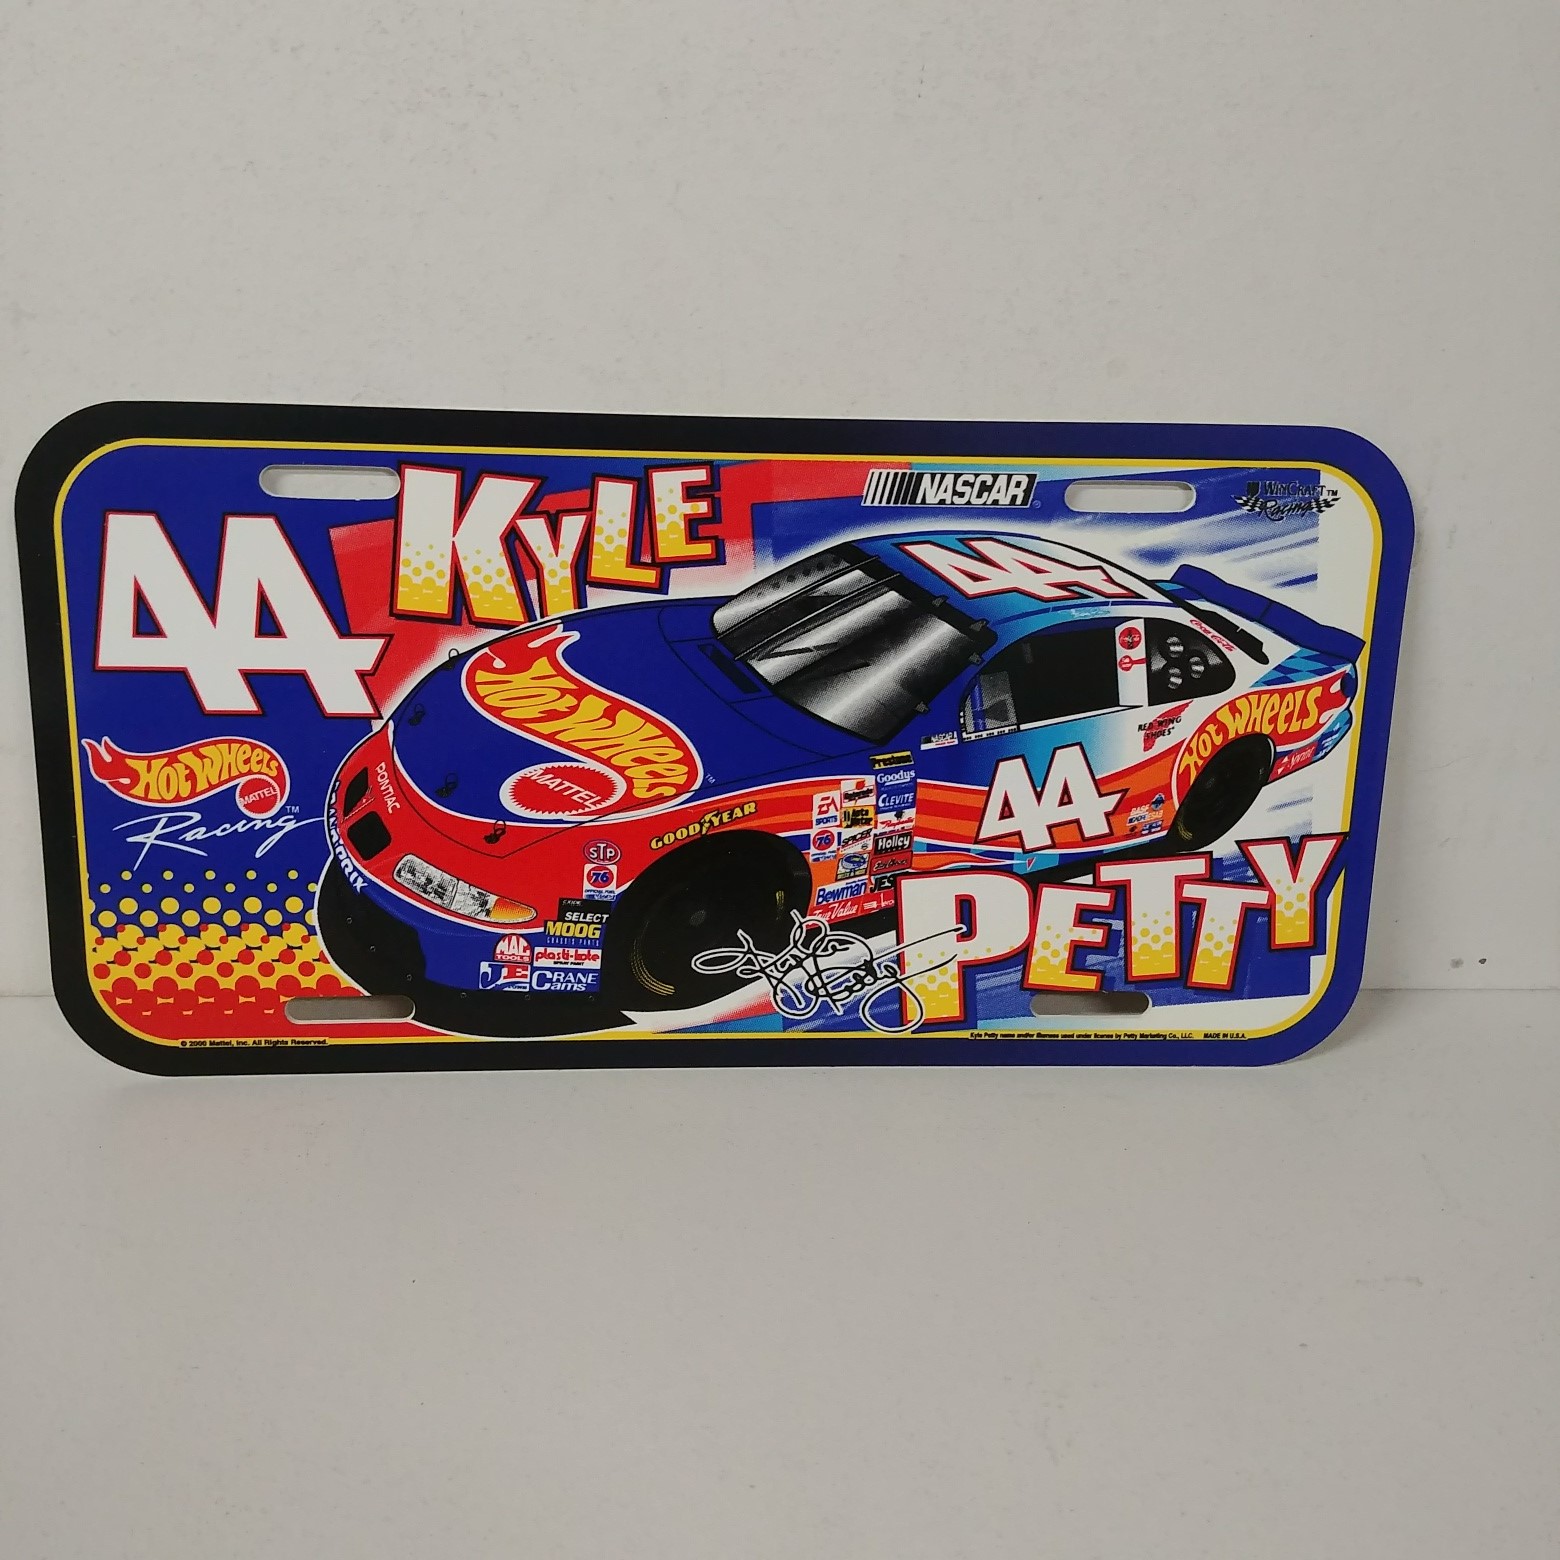 2000 Kyle Petty Hot Wheels plastic license plate